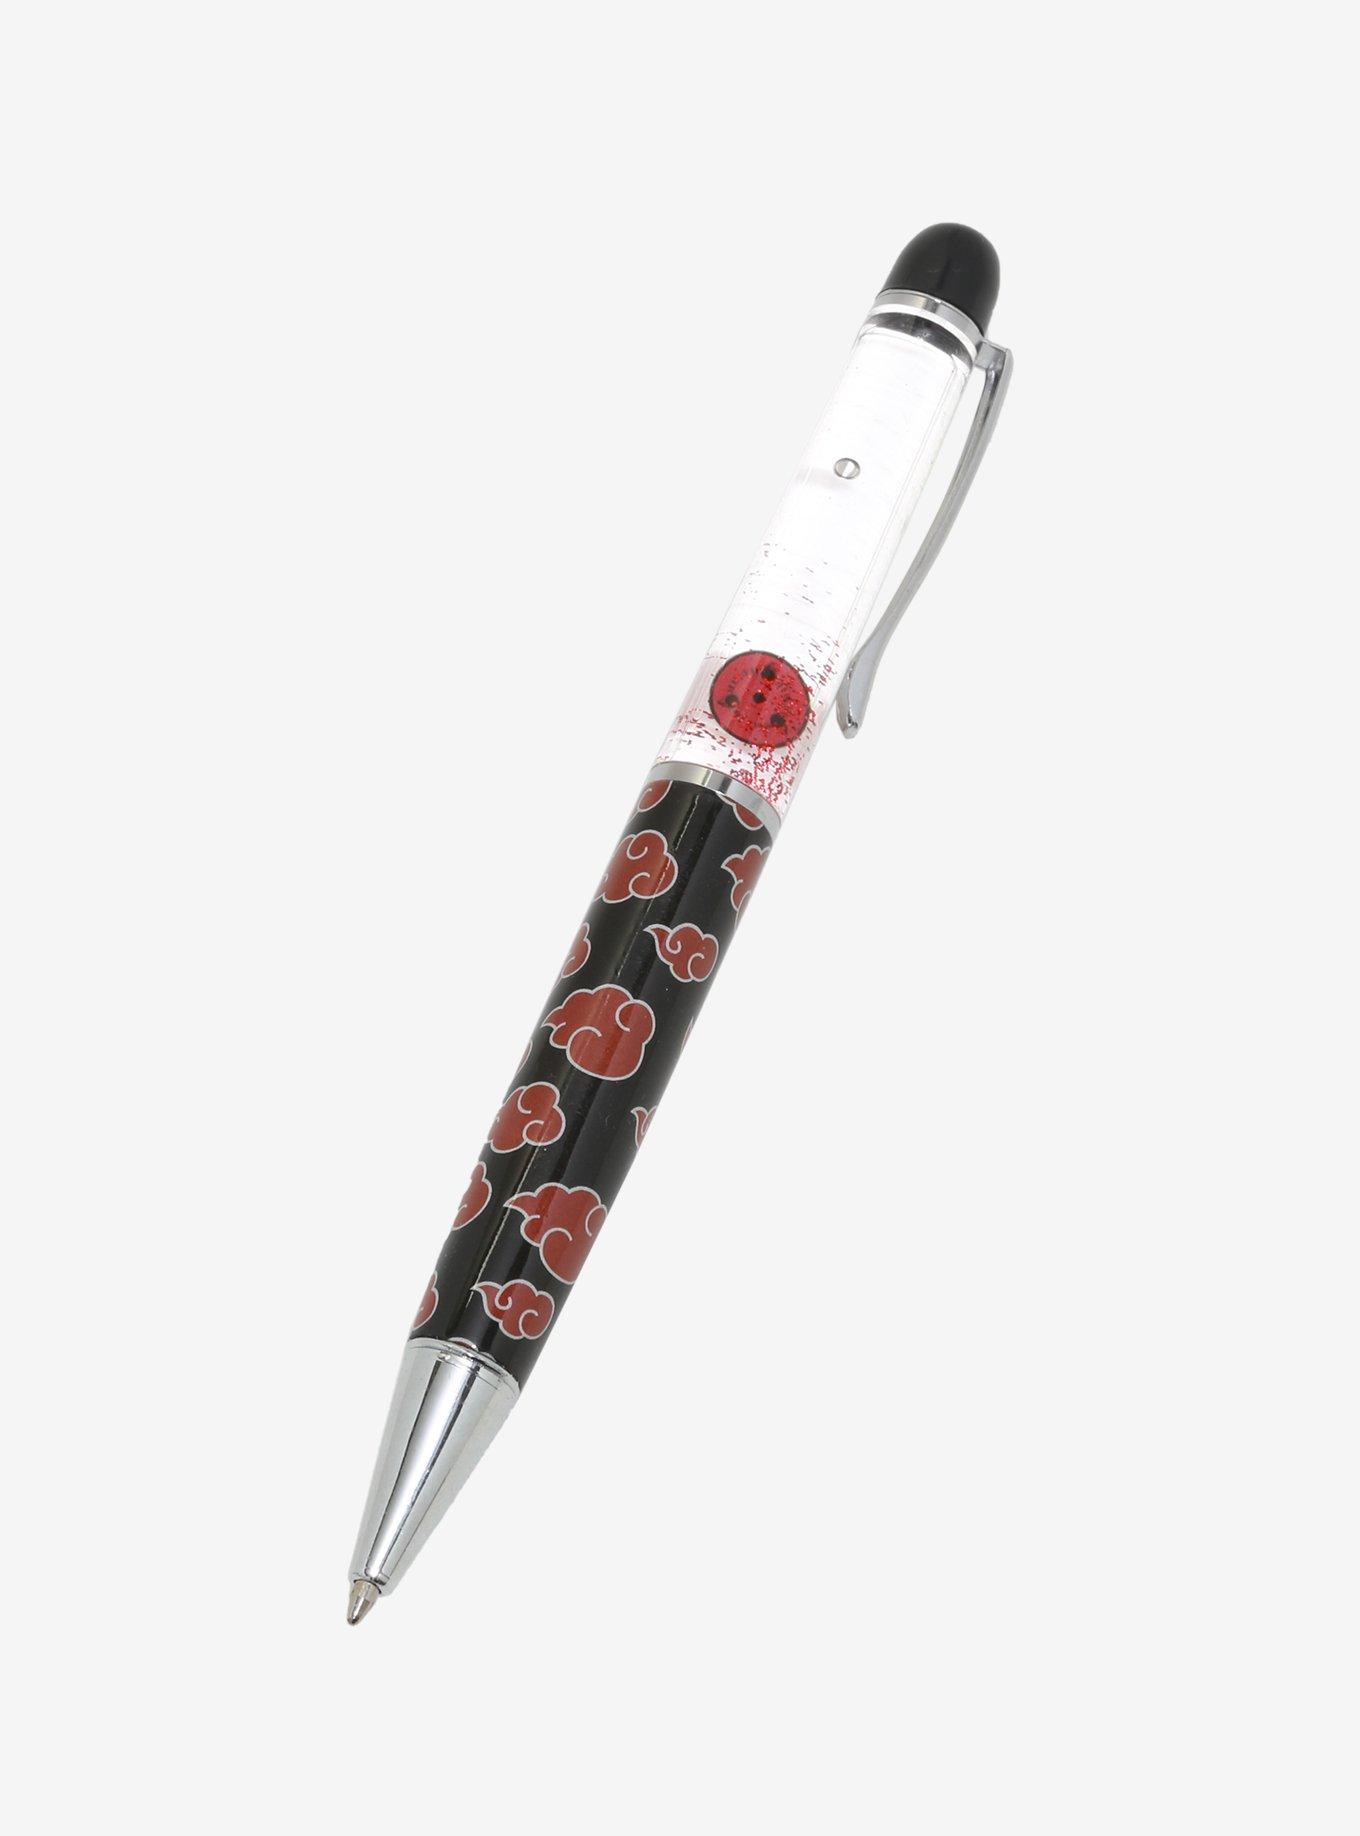 Naruto Pen - Anime Stationery Multi Coloured Ink Pen 1 Pcs